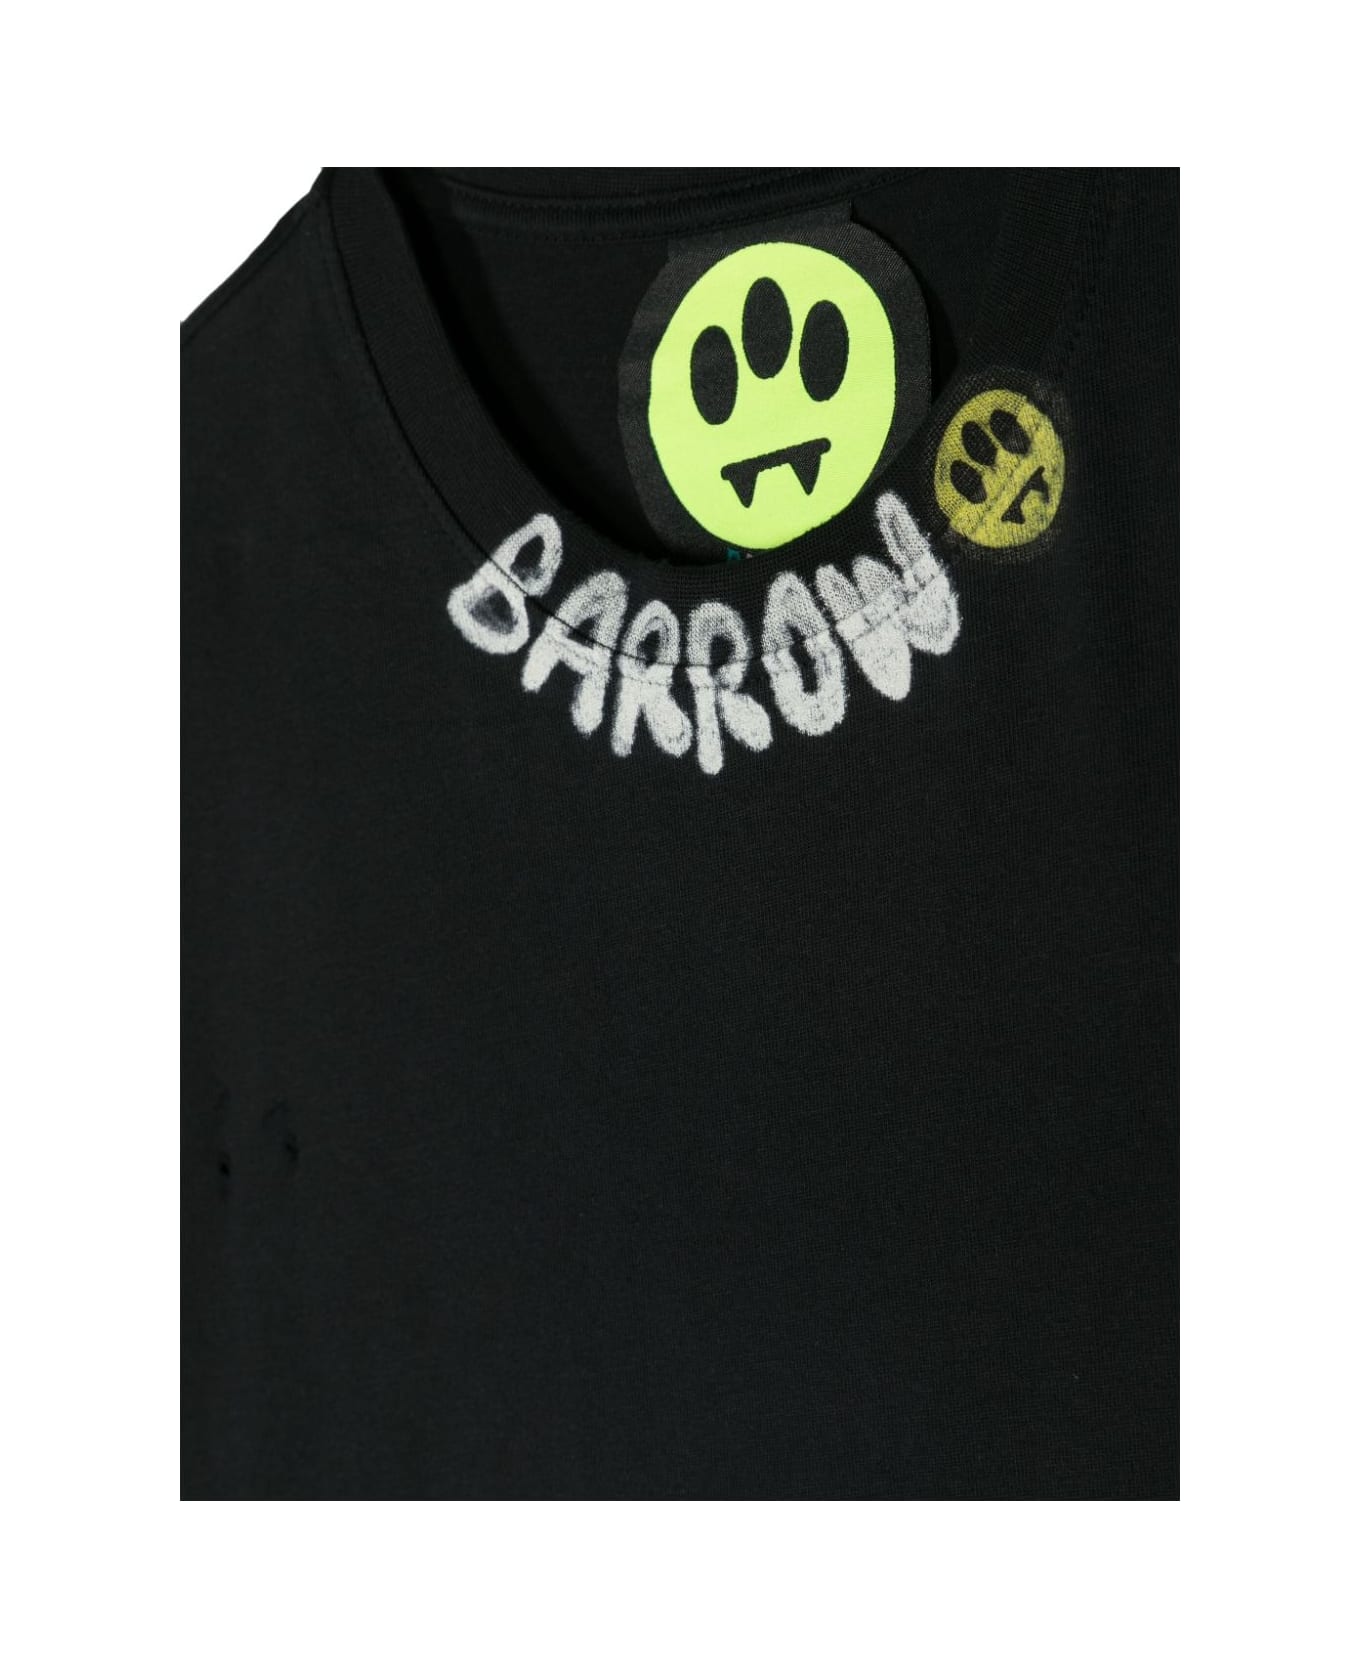 Barrow Black T-shirt With Graffiti Logo On Crew Neck - Black